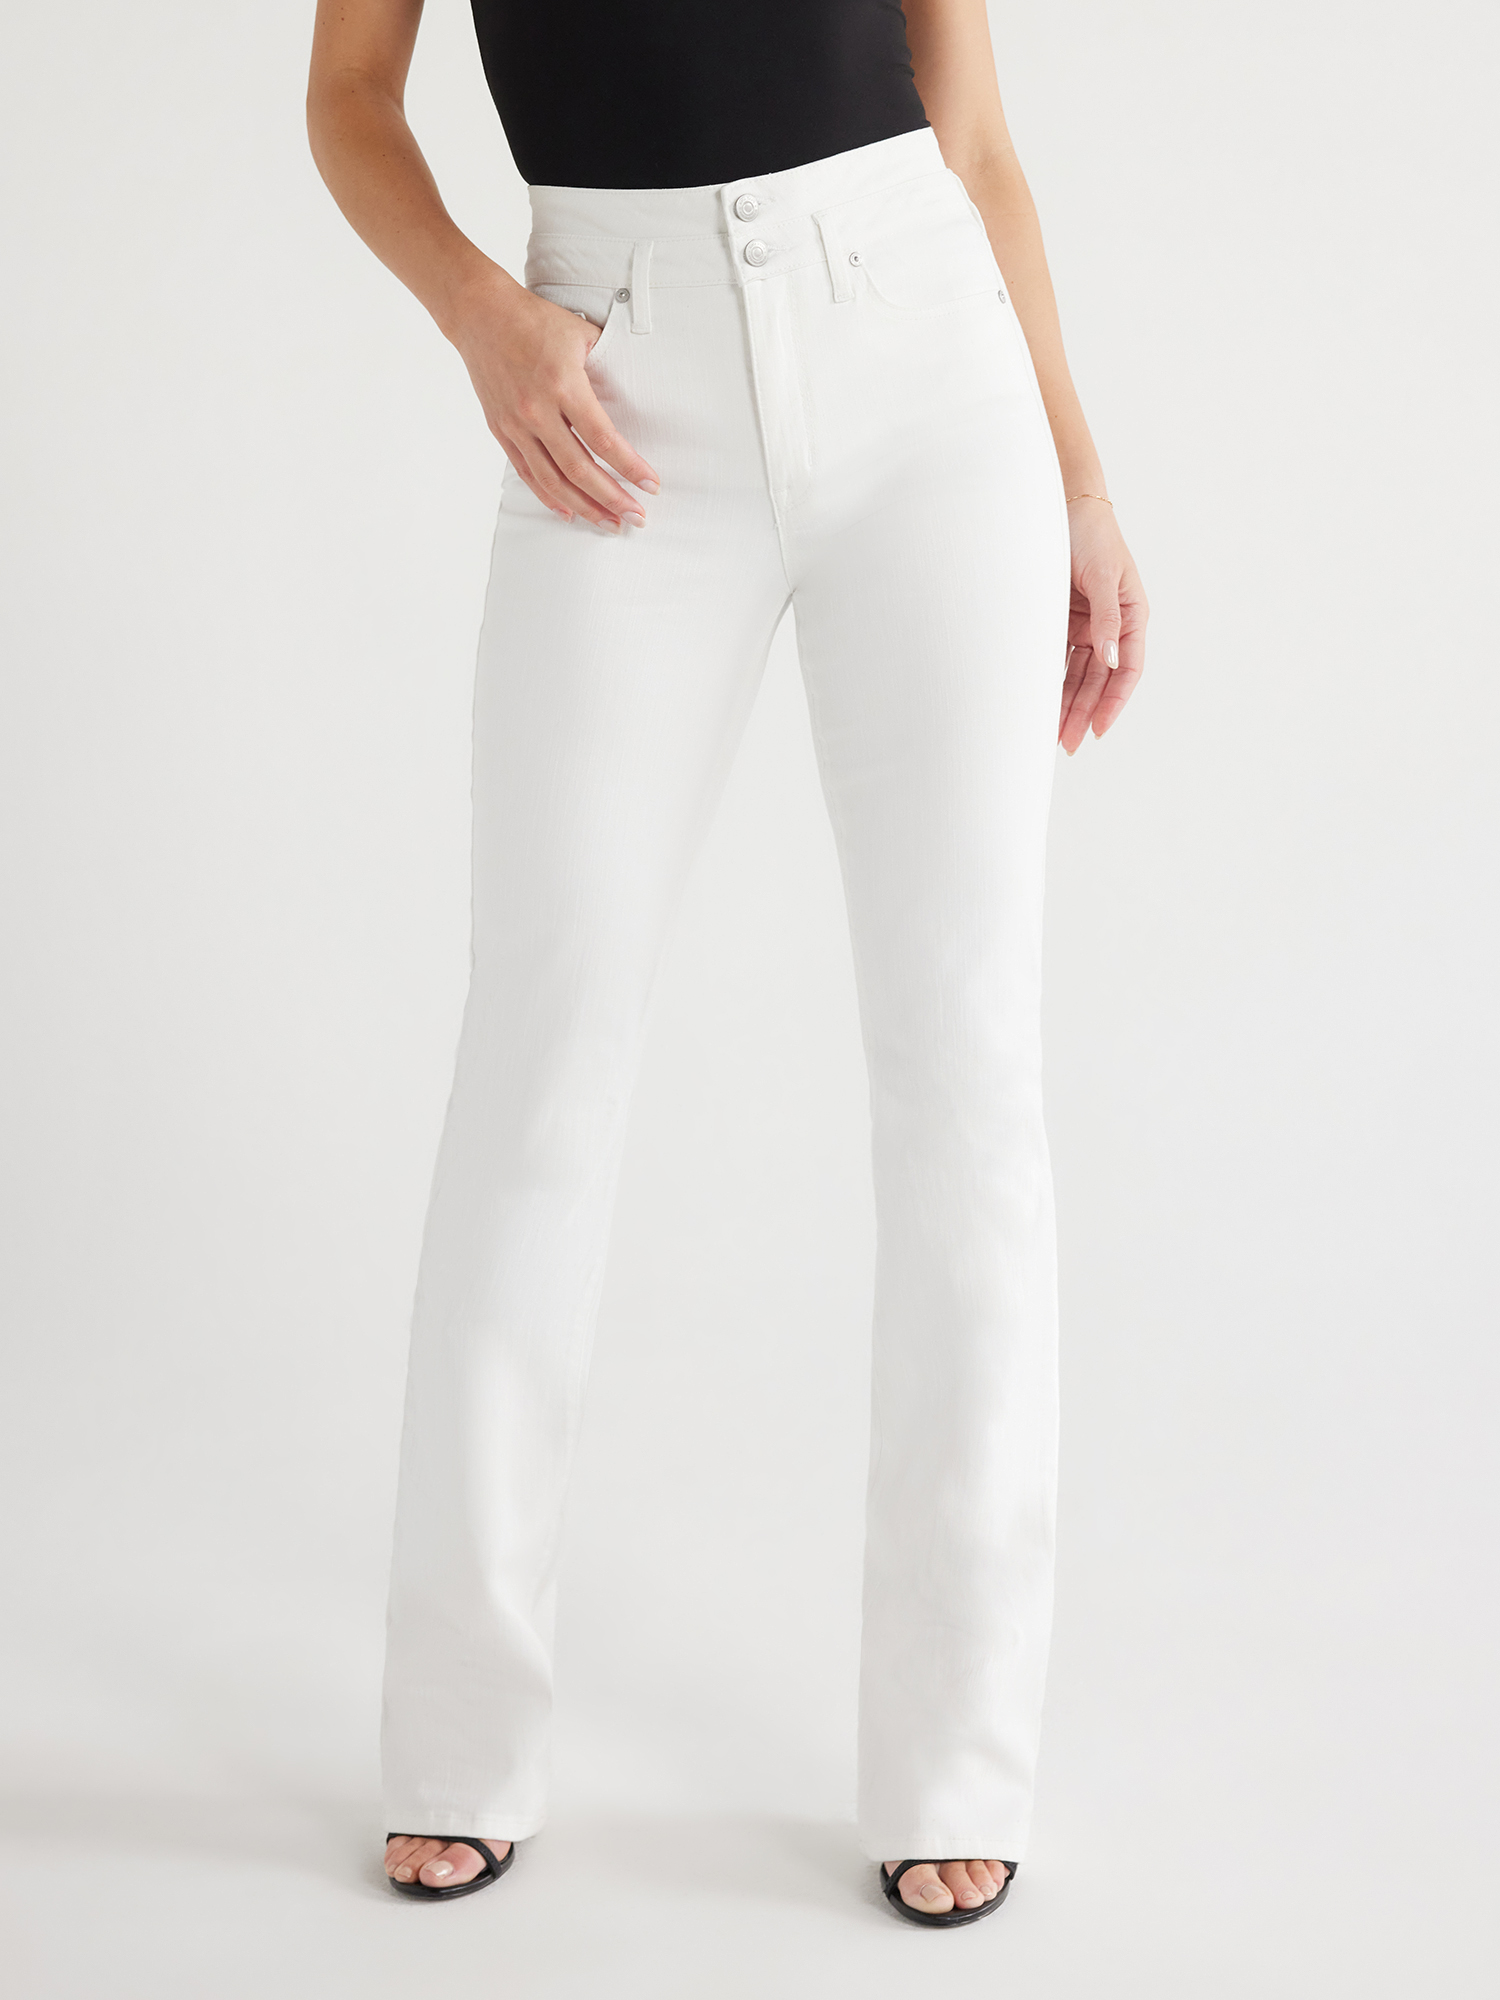 Sofia Jeans Women's Marisol Curvy Bootcut Super High Rise Jeans, 30.5" Inseam, Sizes 0-20